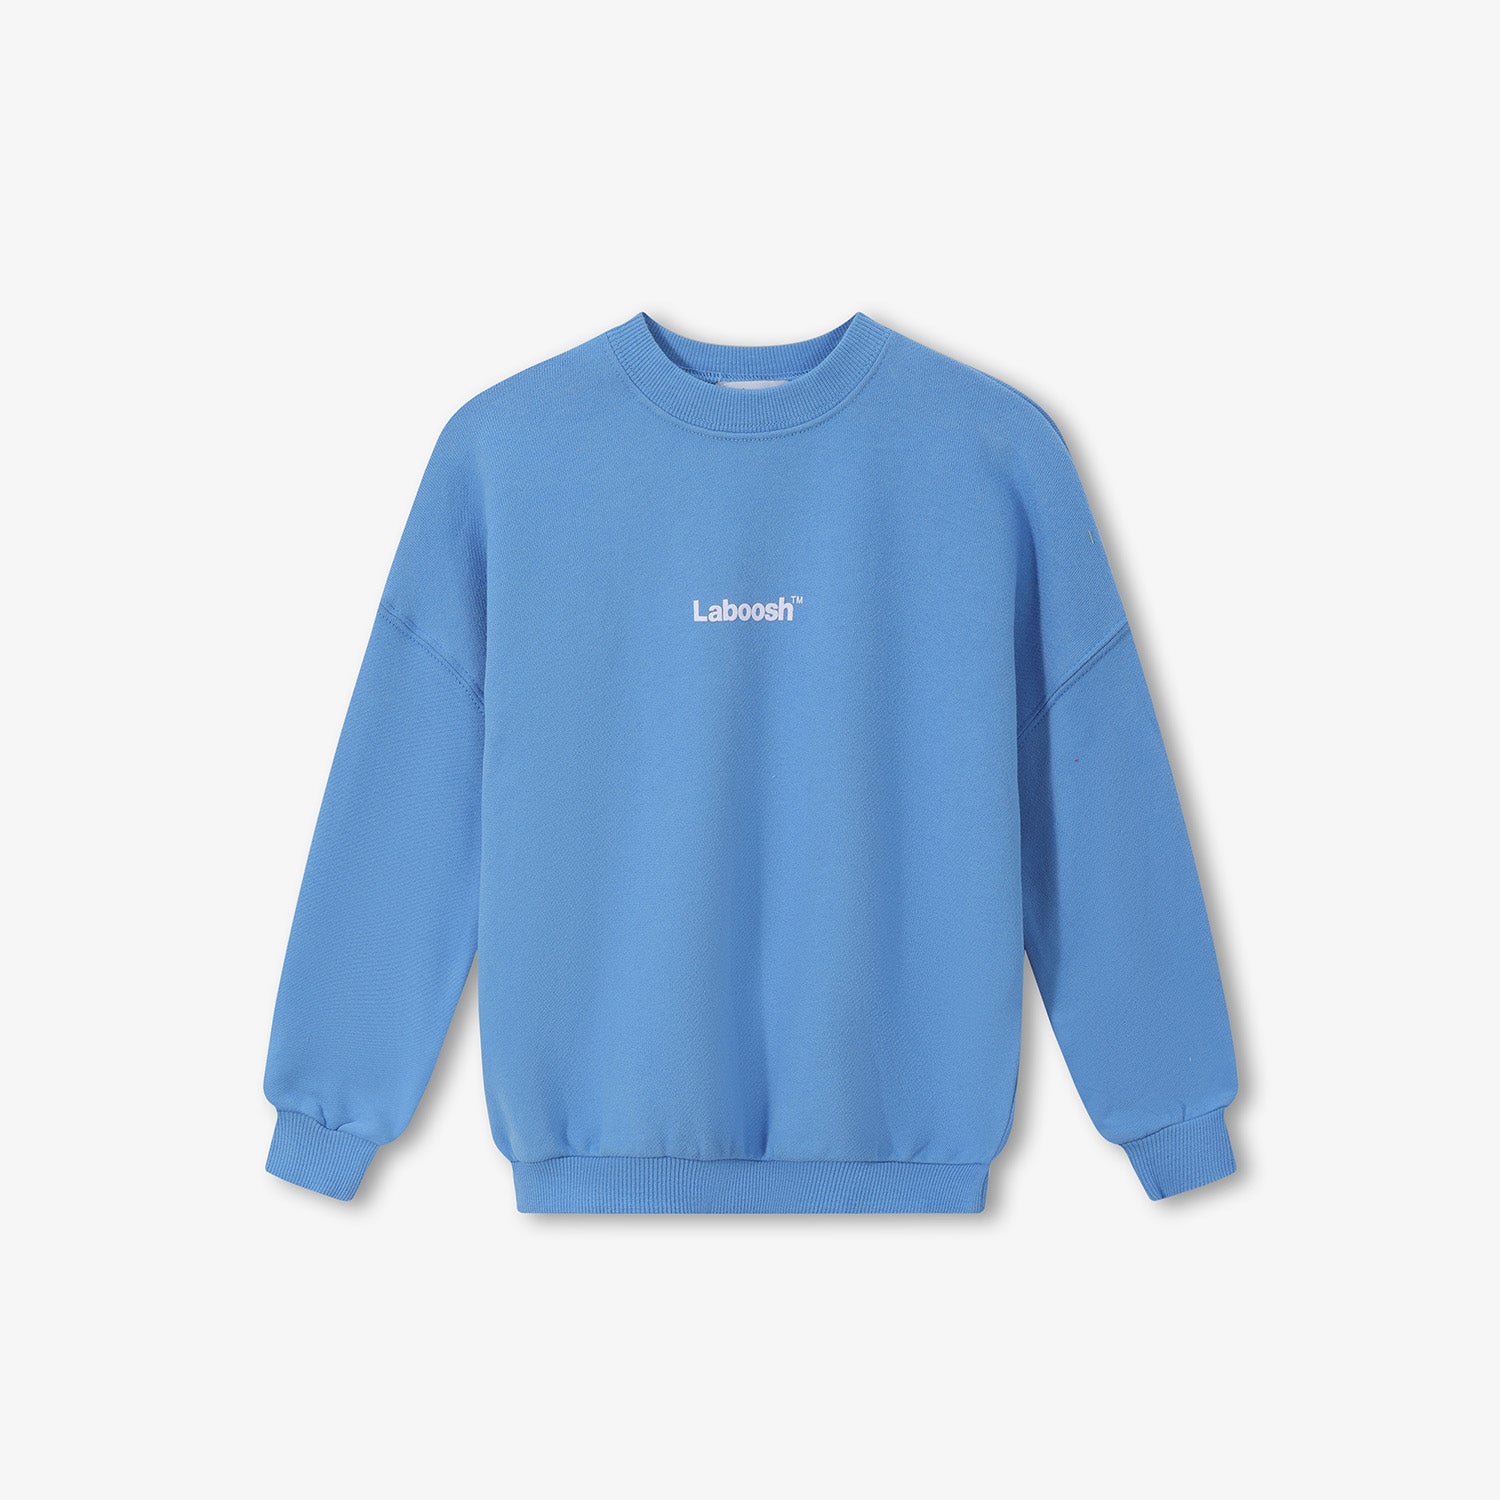 Super Soft Sweatshirt in Light Blue